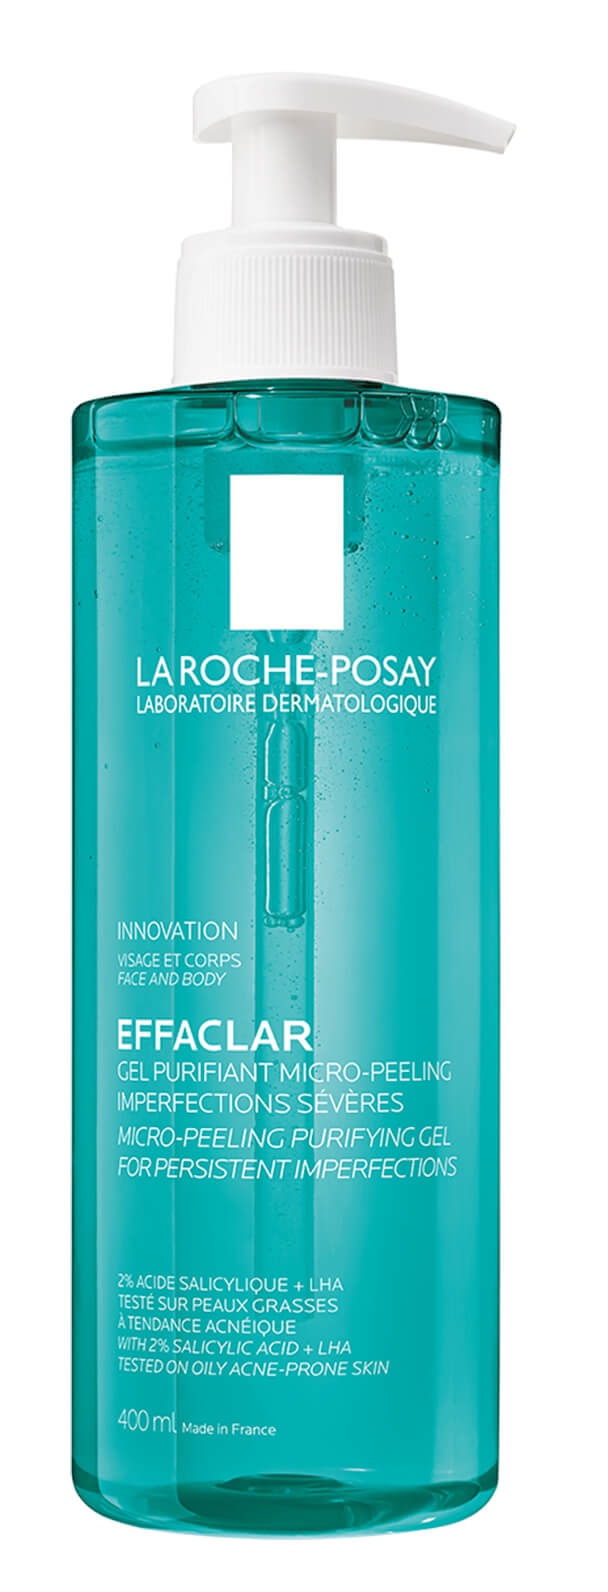 La Roche-Posay Effaclar Micro-Peeling Purifying Gel